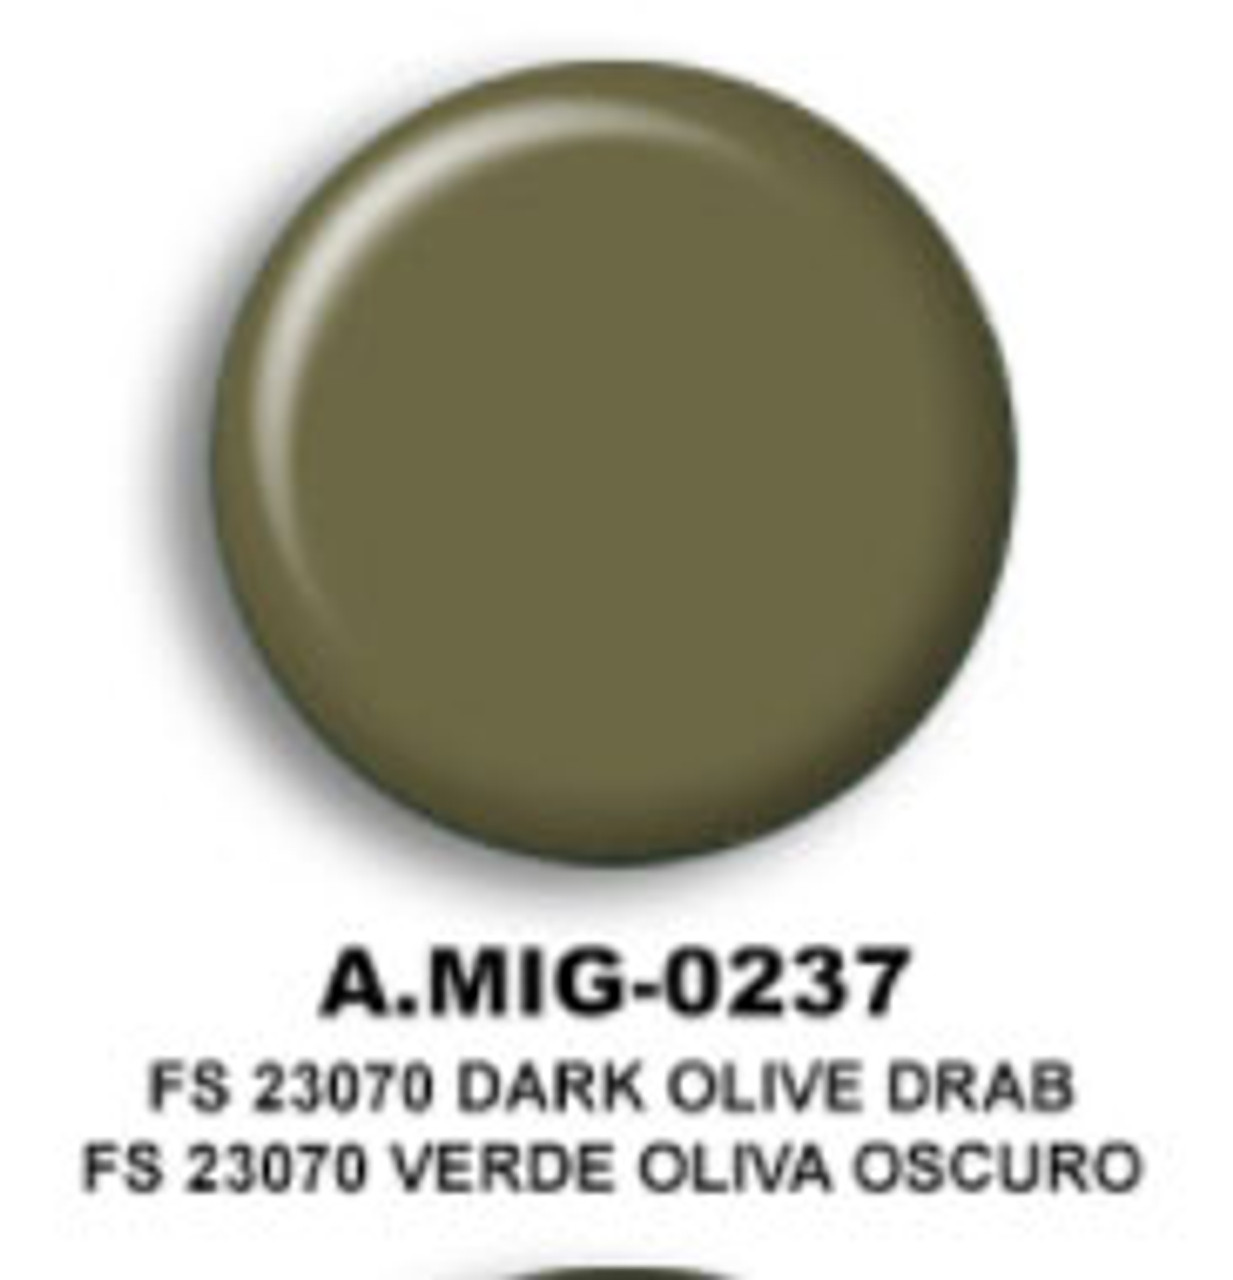 Mission Models Dark Olive Drab Green Acrylic Paint 68-74 (FS 24087